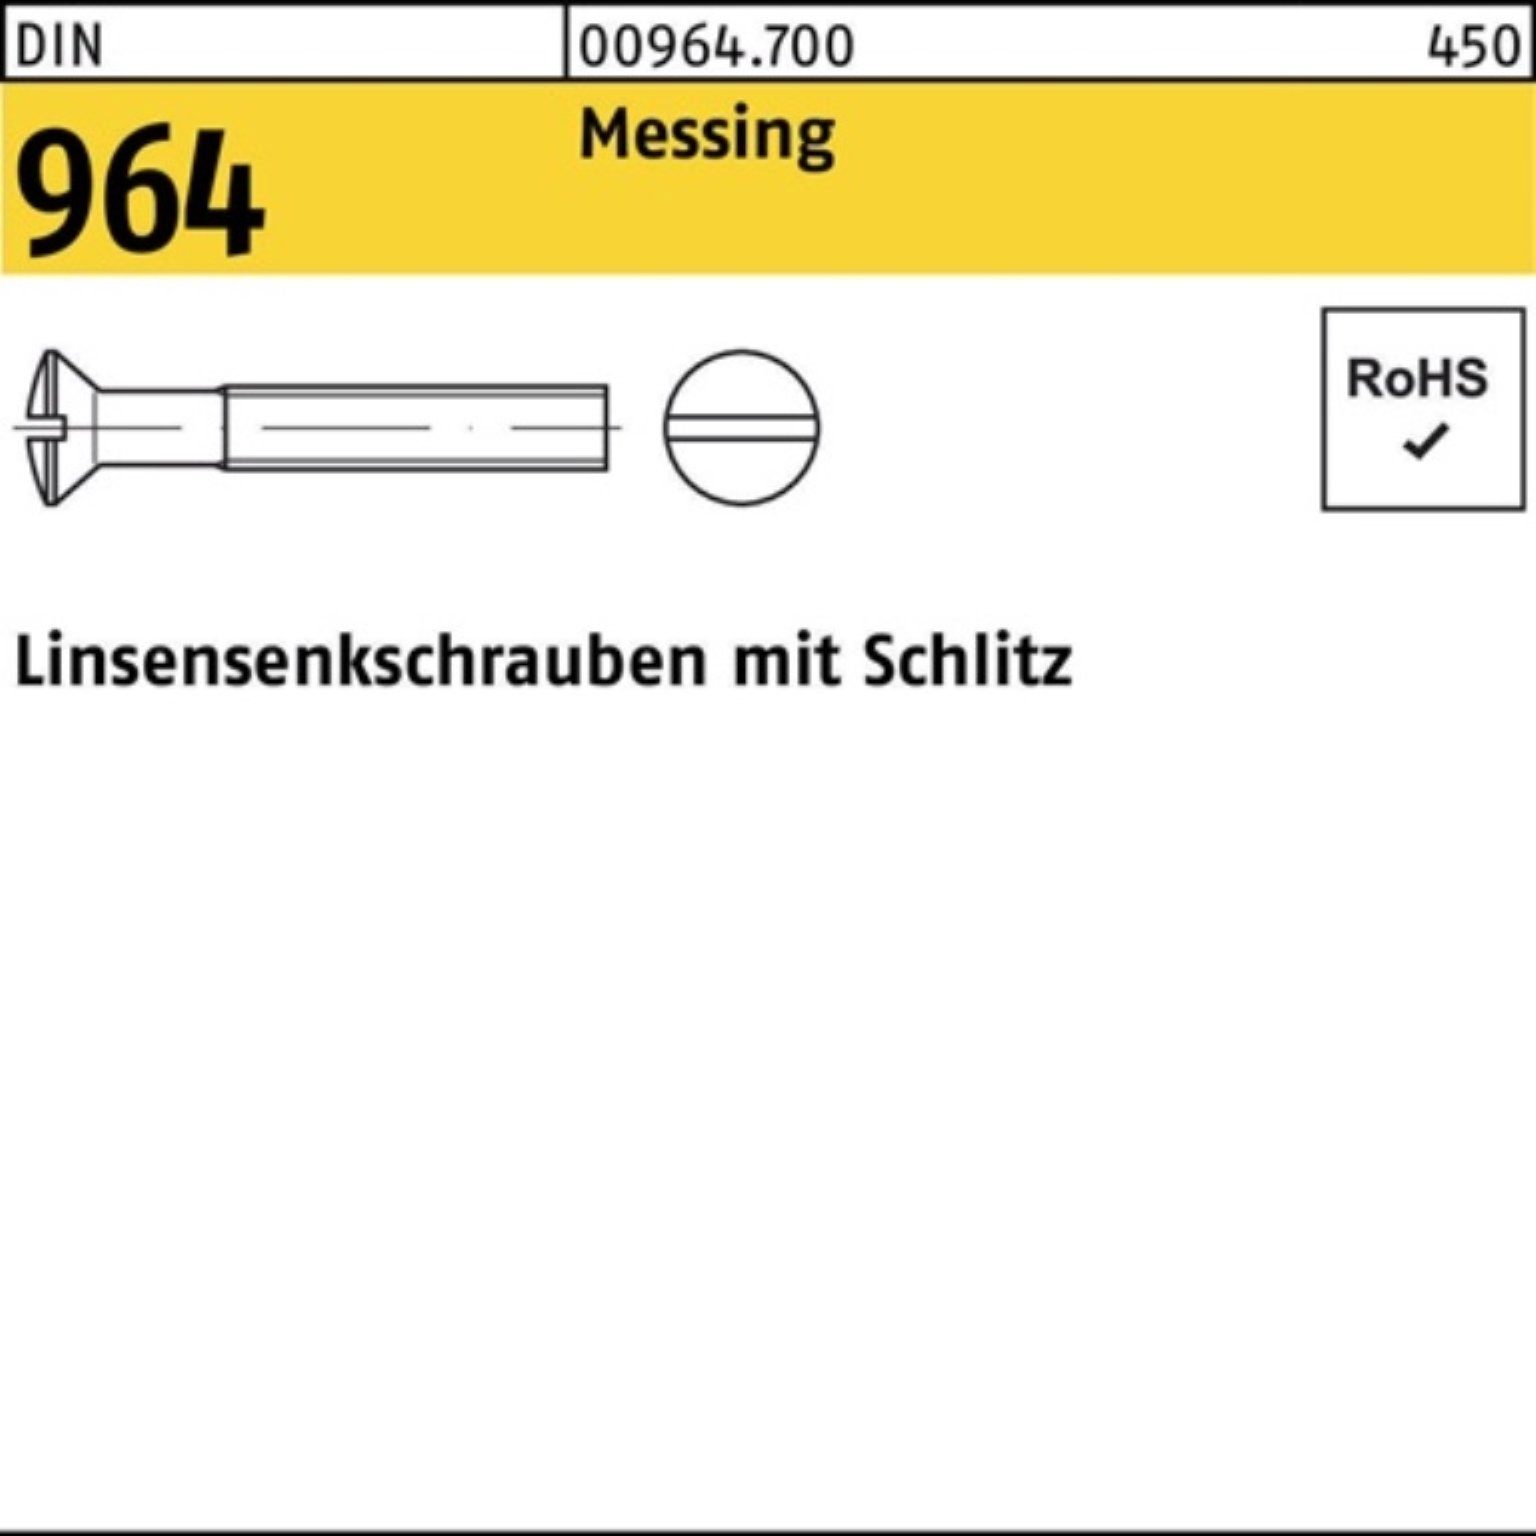 Reyher Linsenschraube 200er Stüc M6x Schlitz Linsensenkschraube DIN 45 964 Messing Pack 200